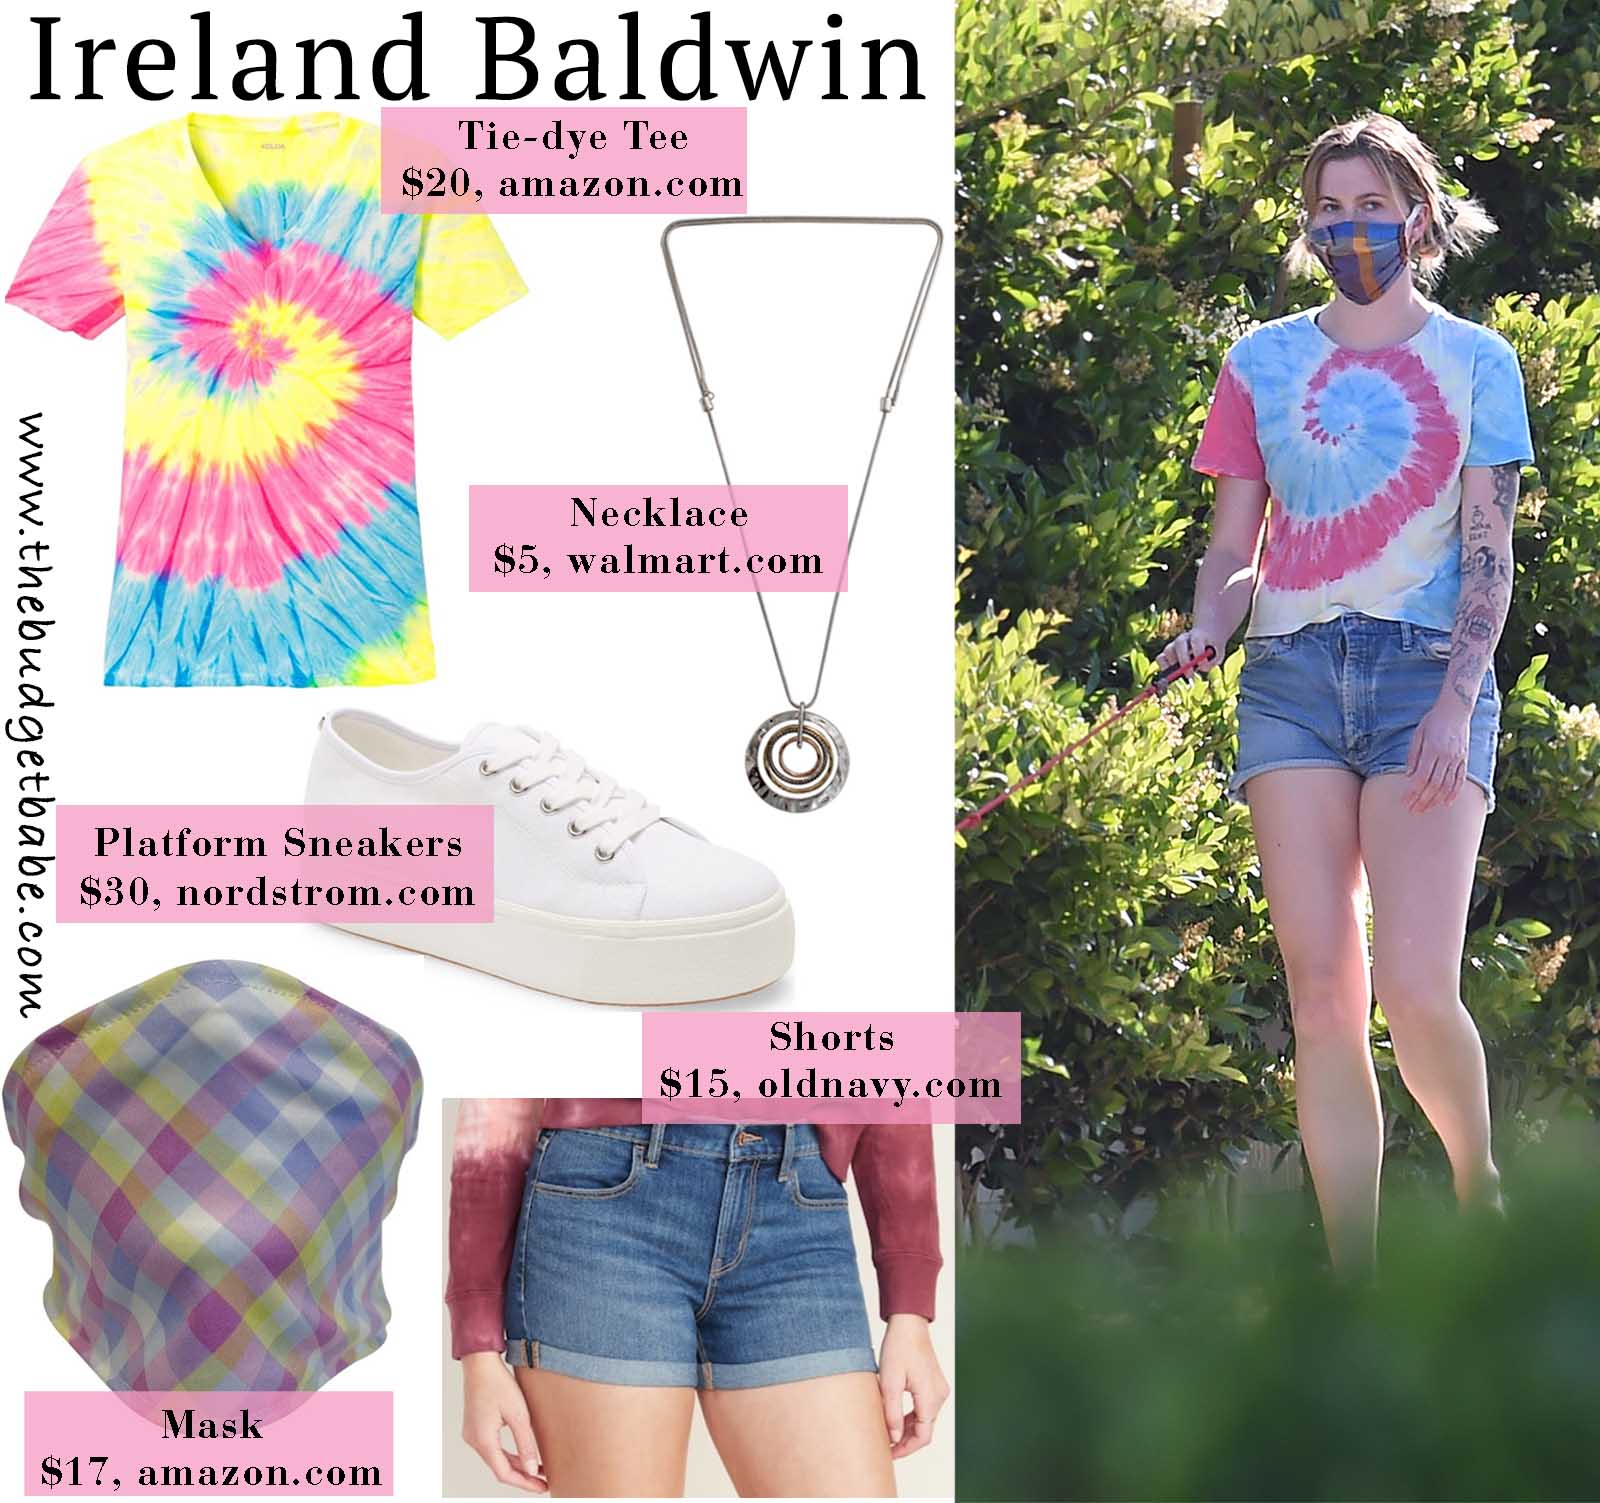 Ireland Baldwin rocks a tiedye shirt that we love!